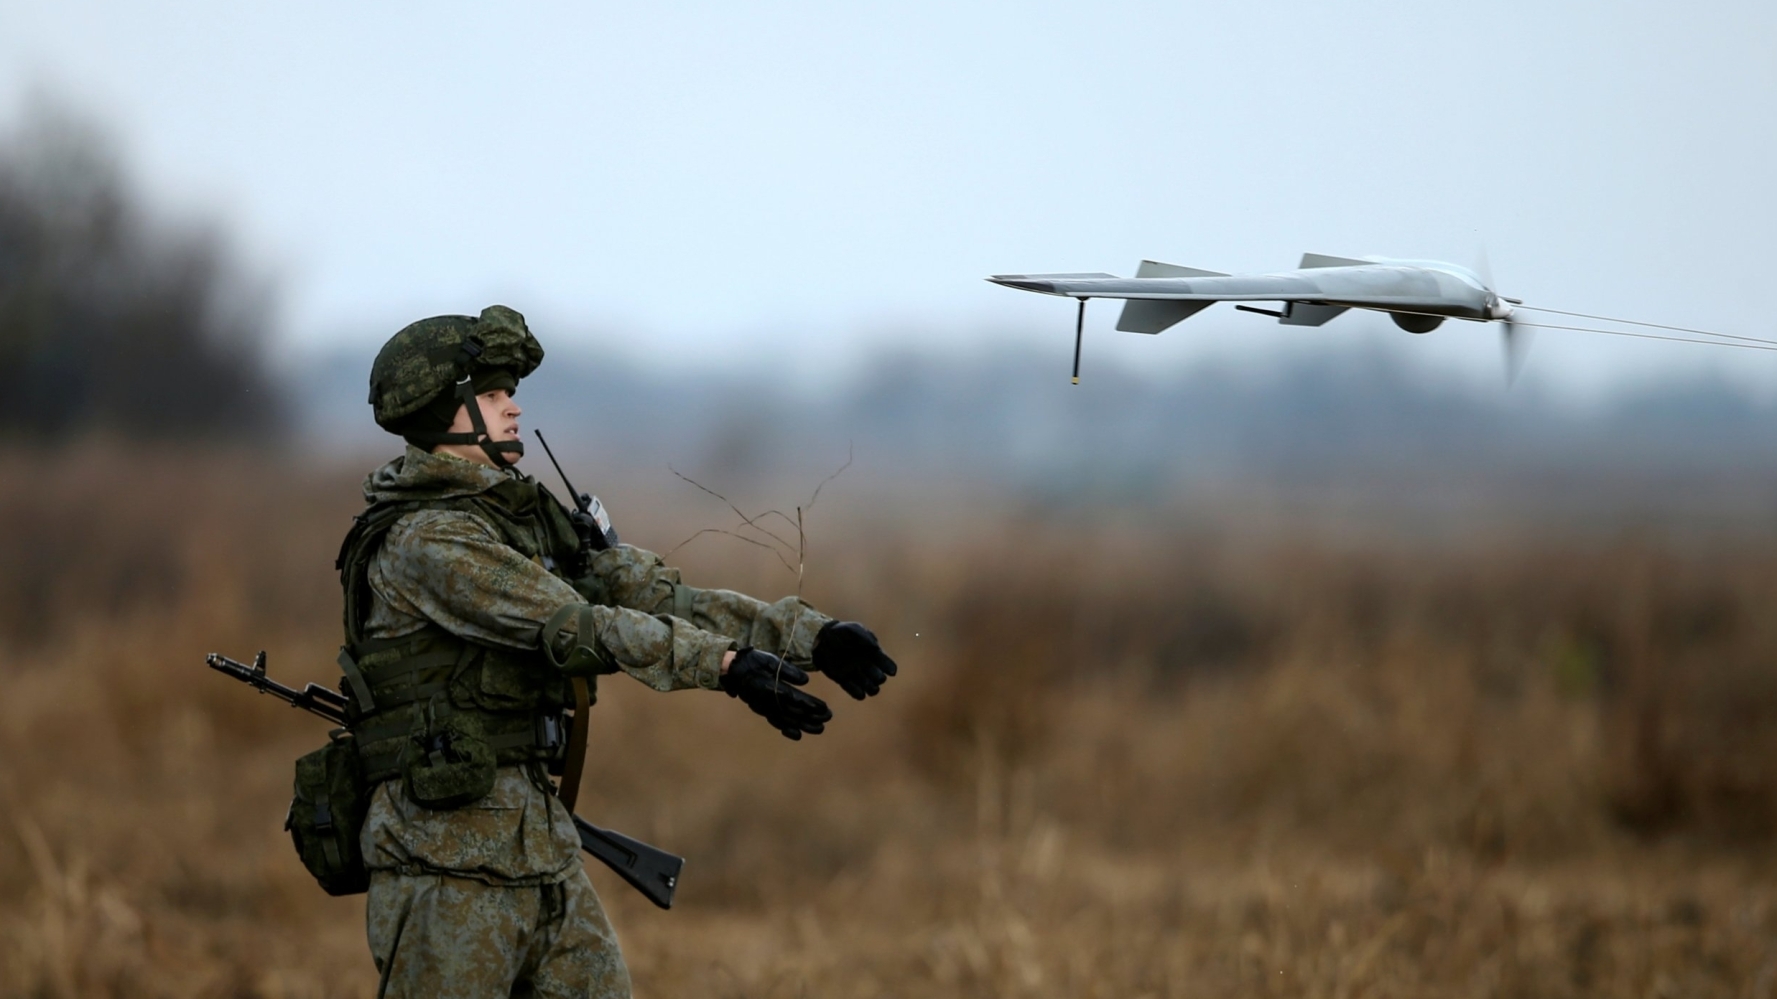 Enemy attacks Nikopol with kamikaze drones, causing damage